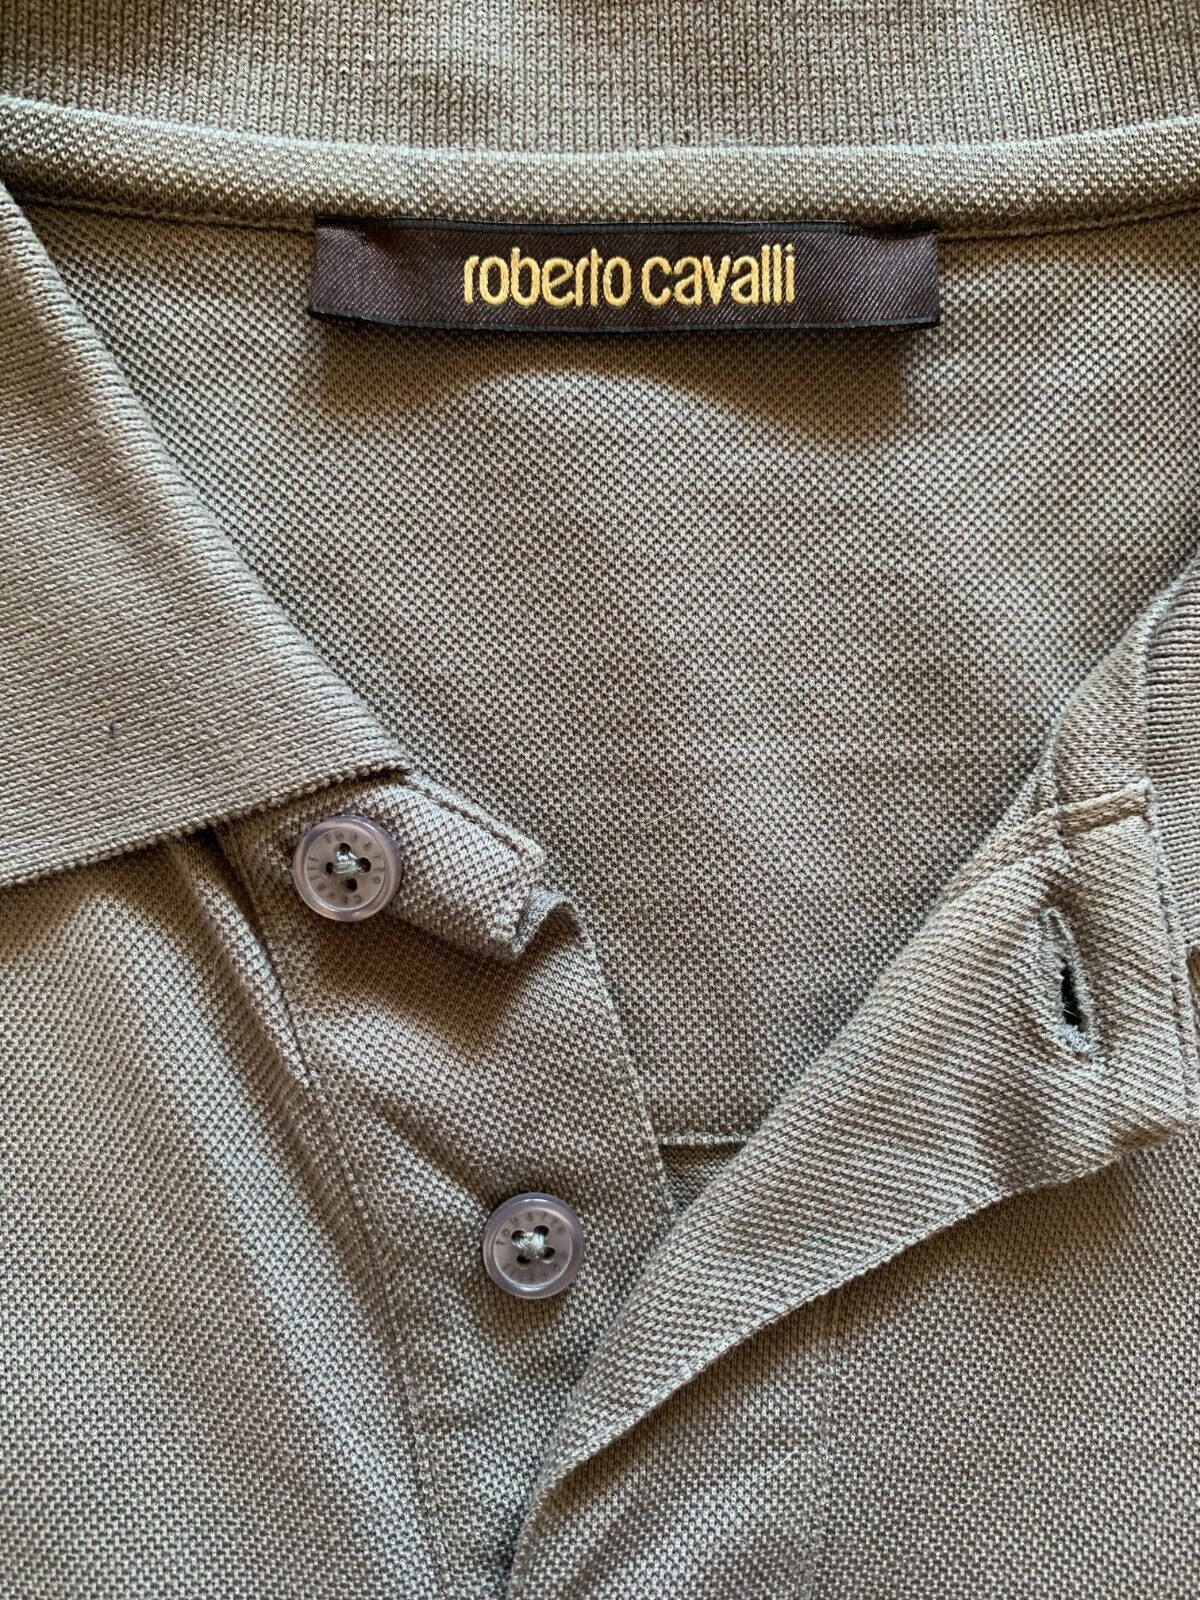 AUTHENTIC Roberto Cavalli Men's Polo Cotton T-Shirt Size M